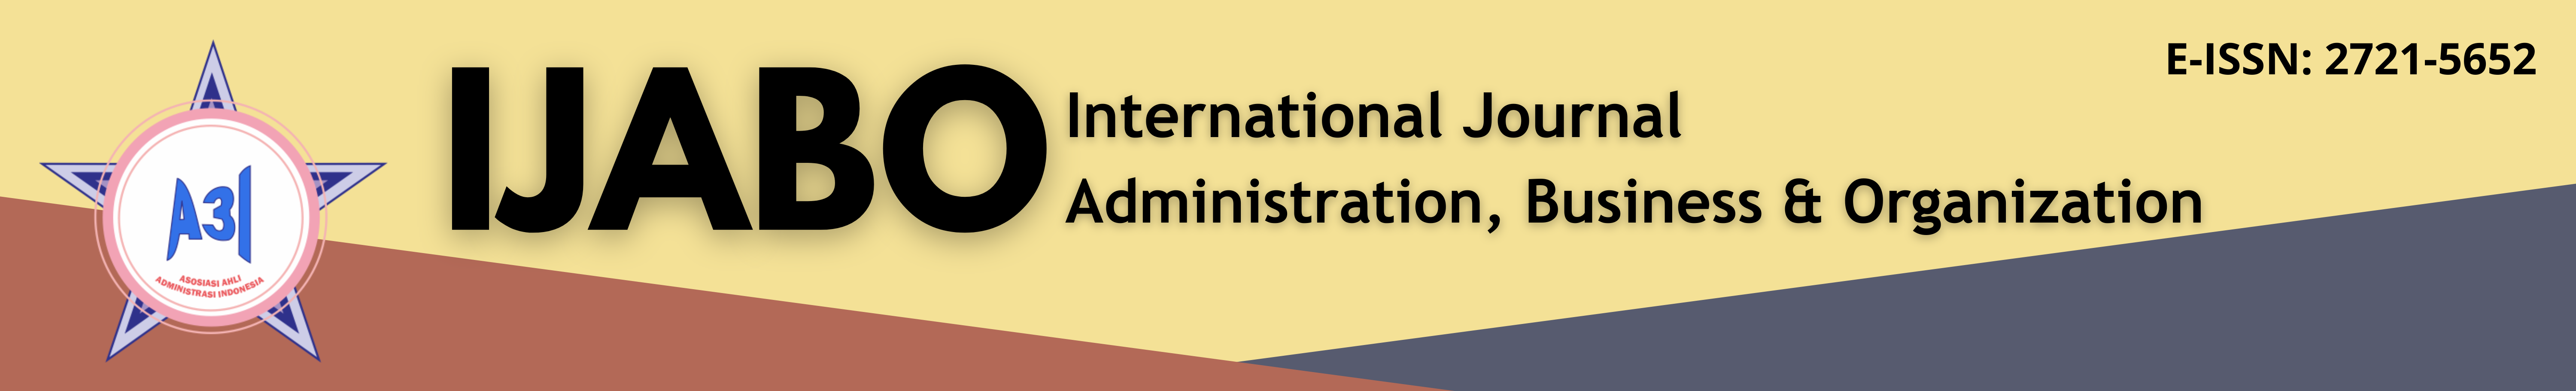 International Journal Administration, Business & Organization